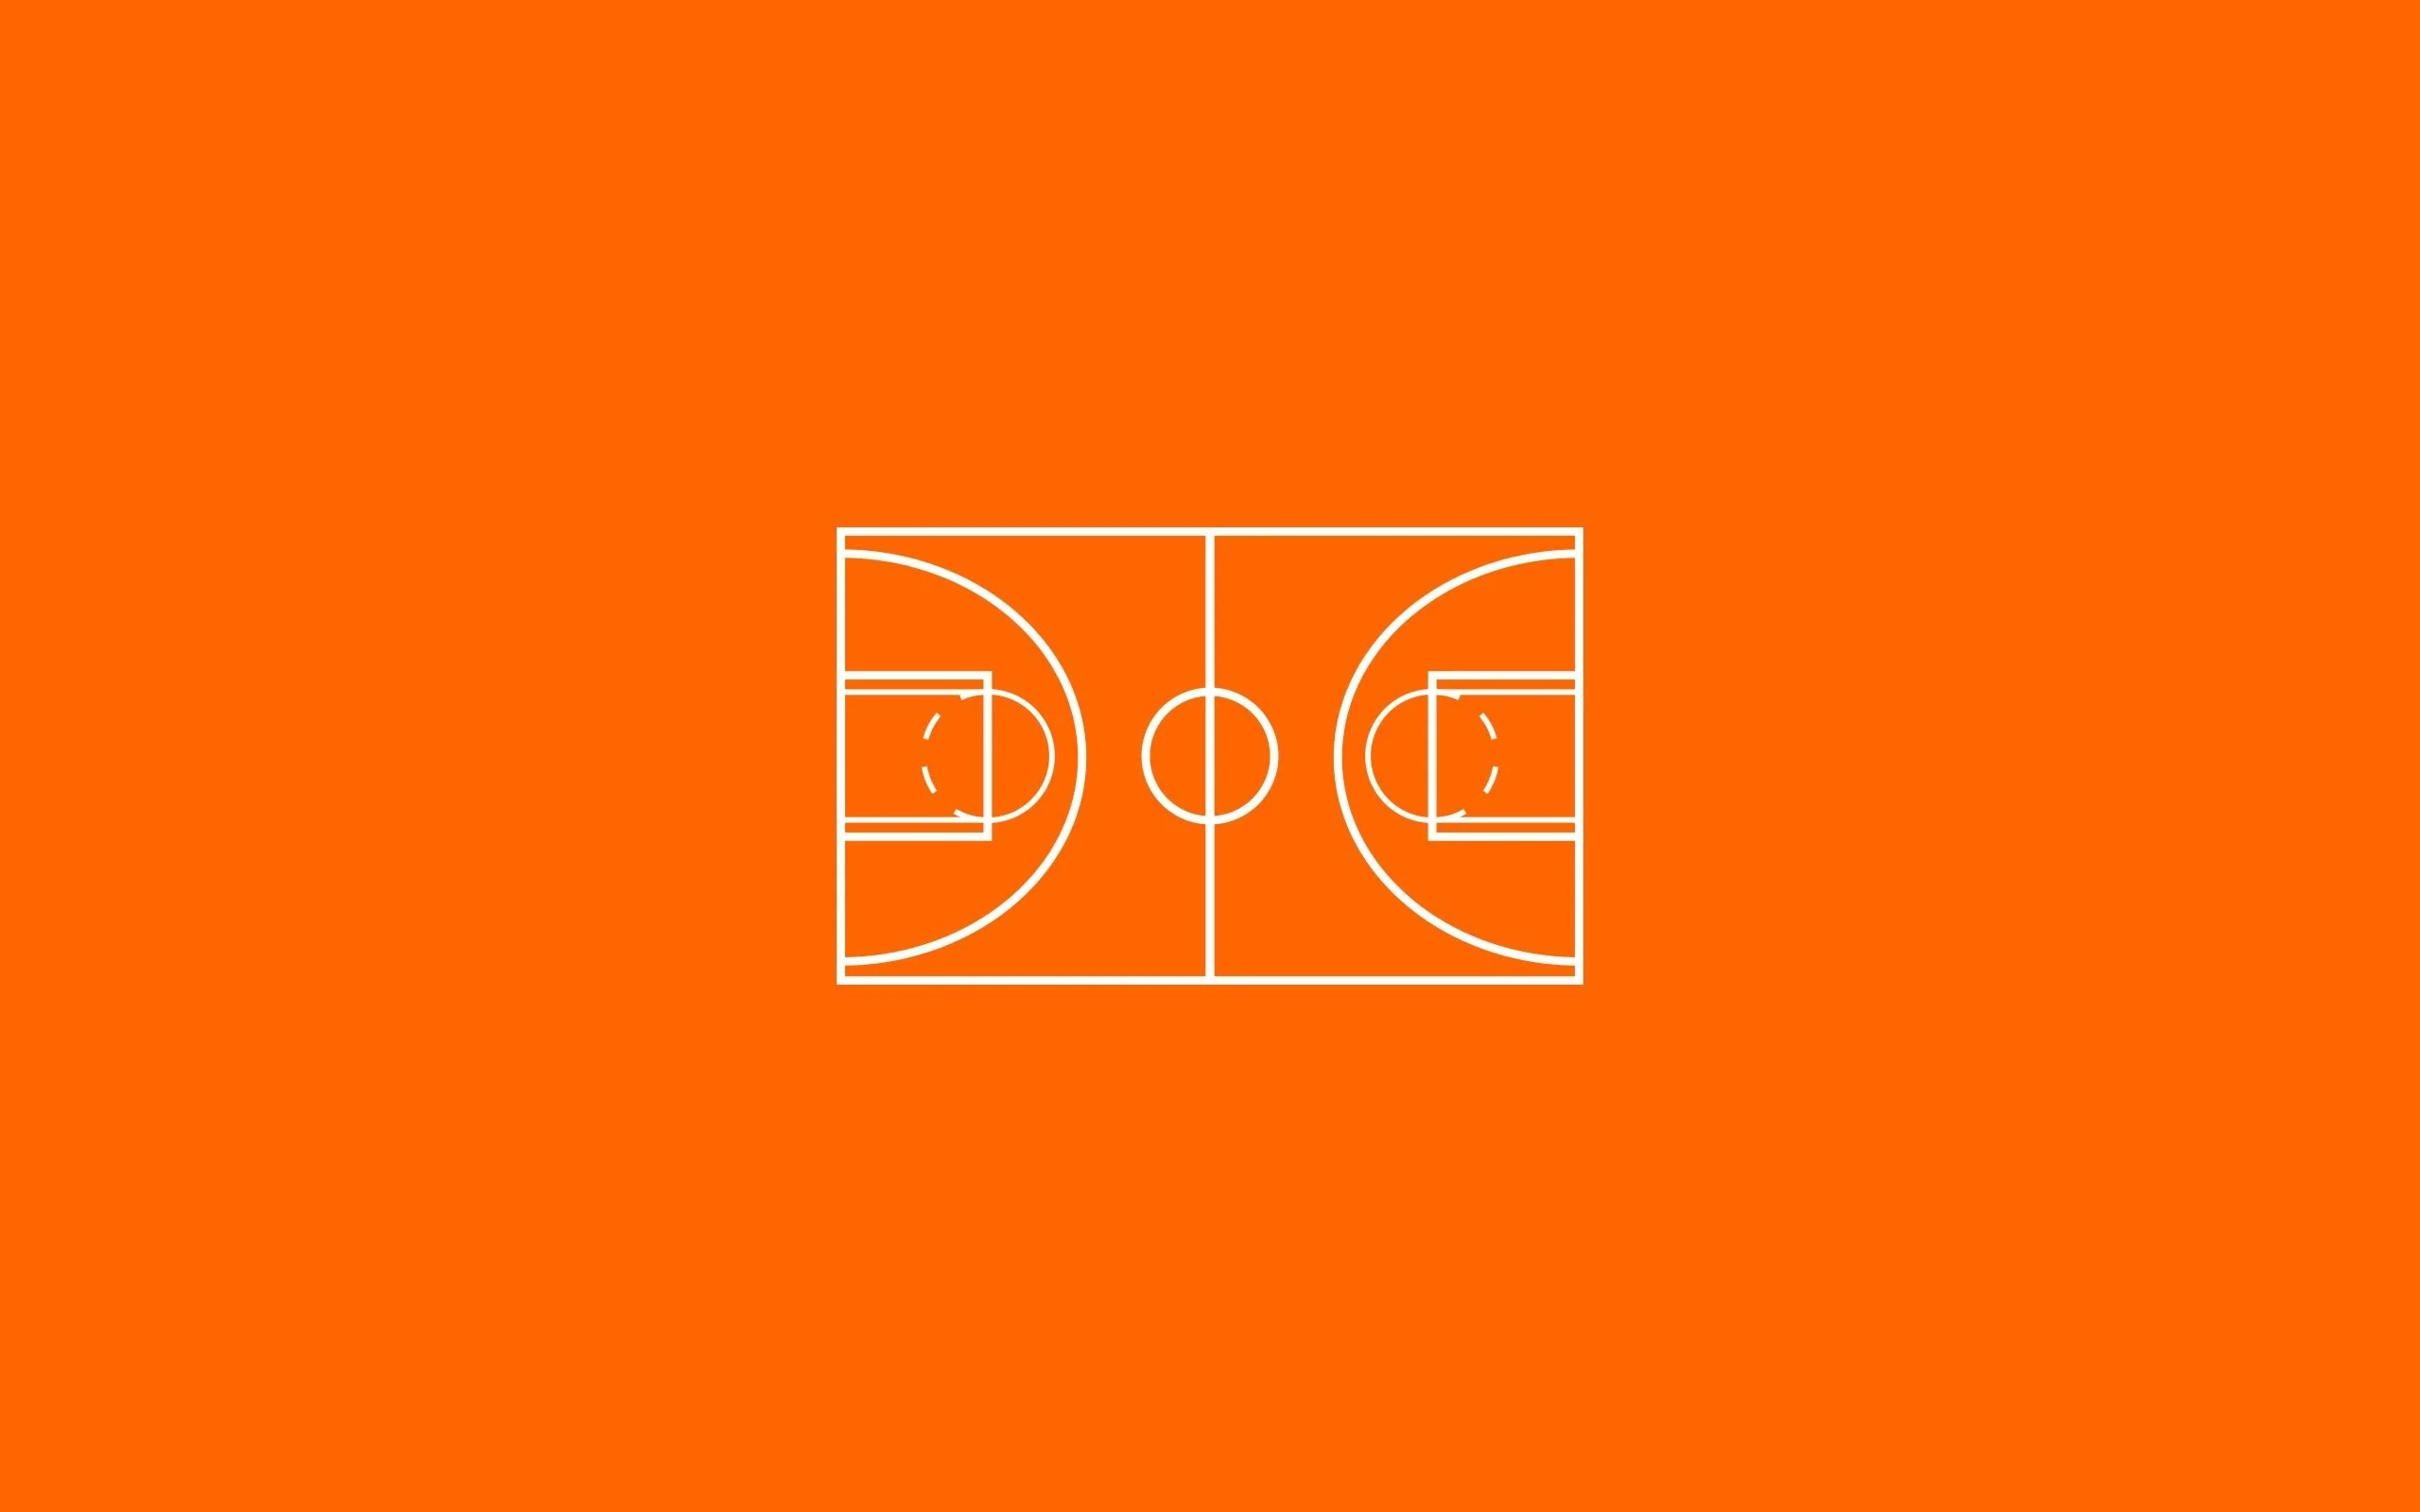 Free Download Basketball Court Wallpaper – of 3 – wallpaper.wiki